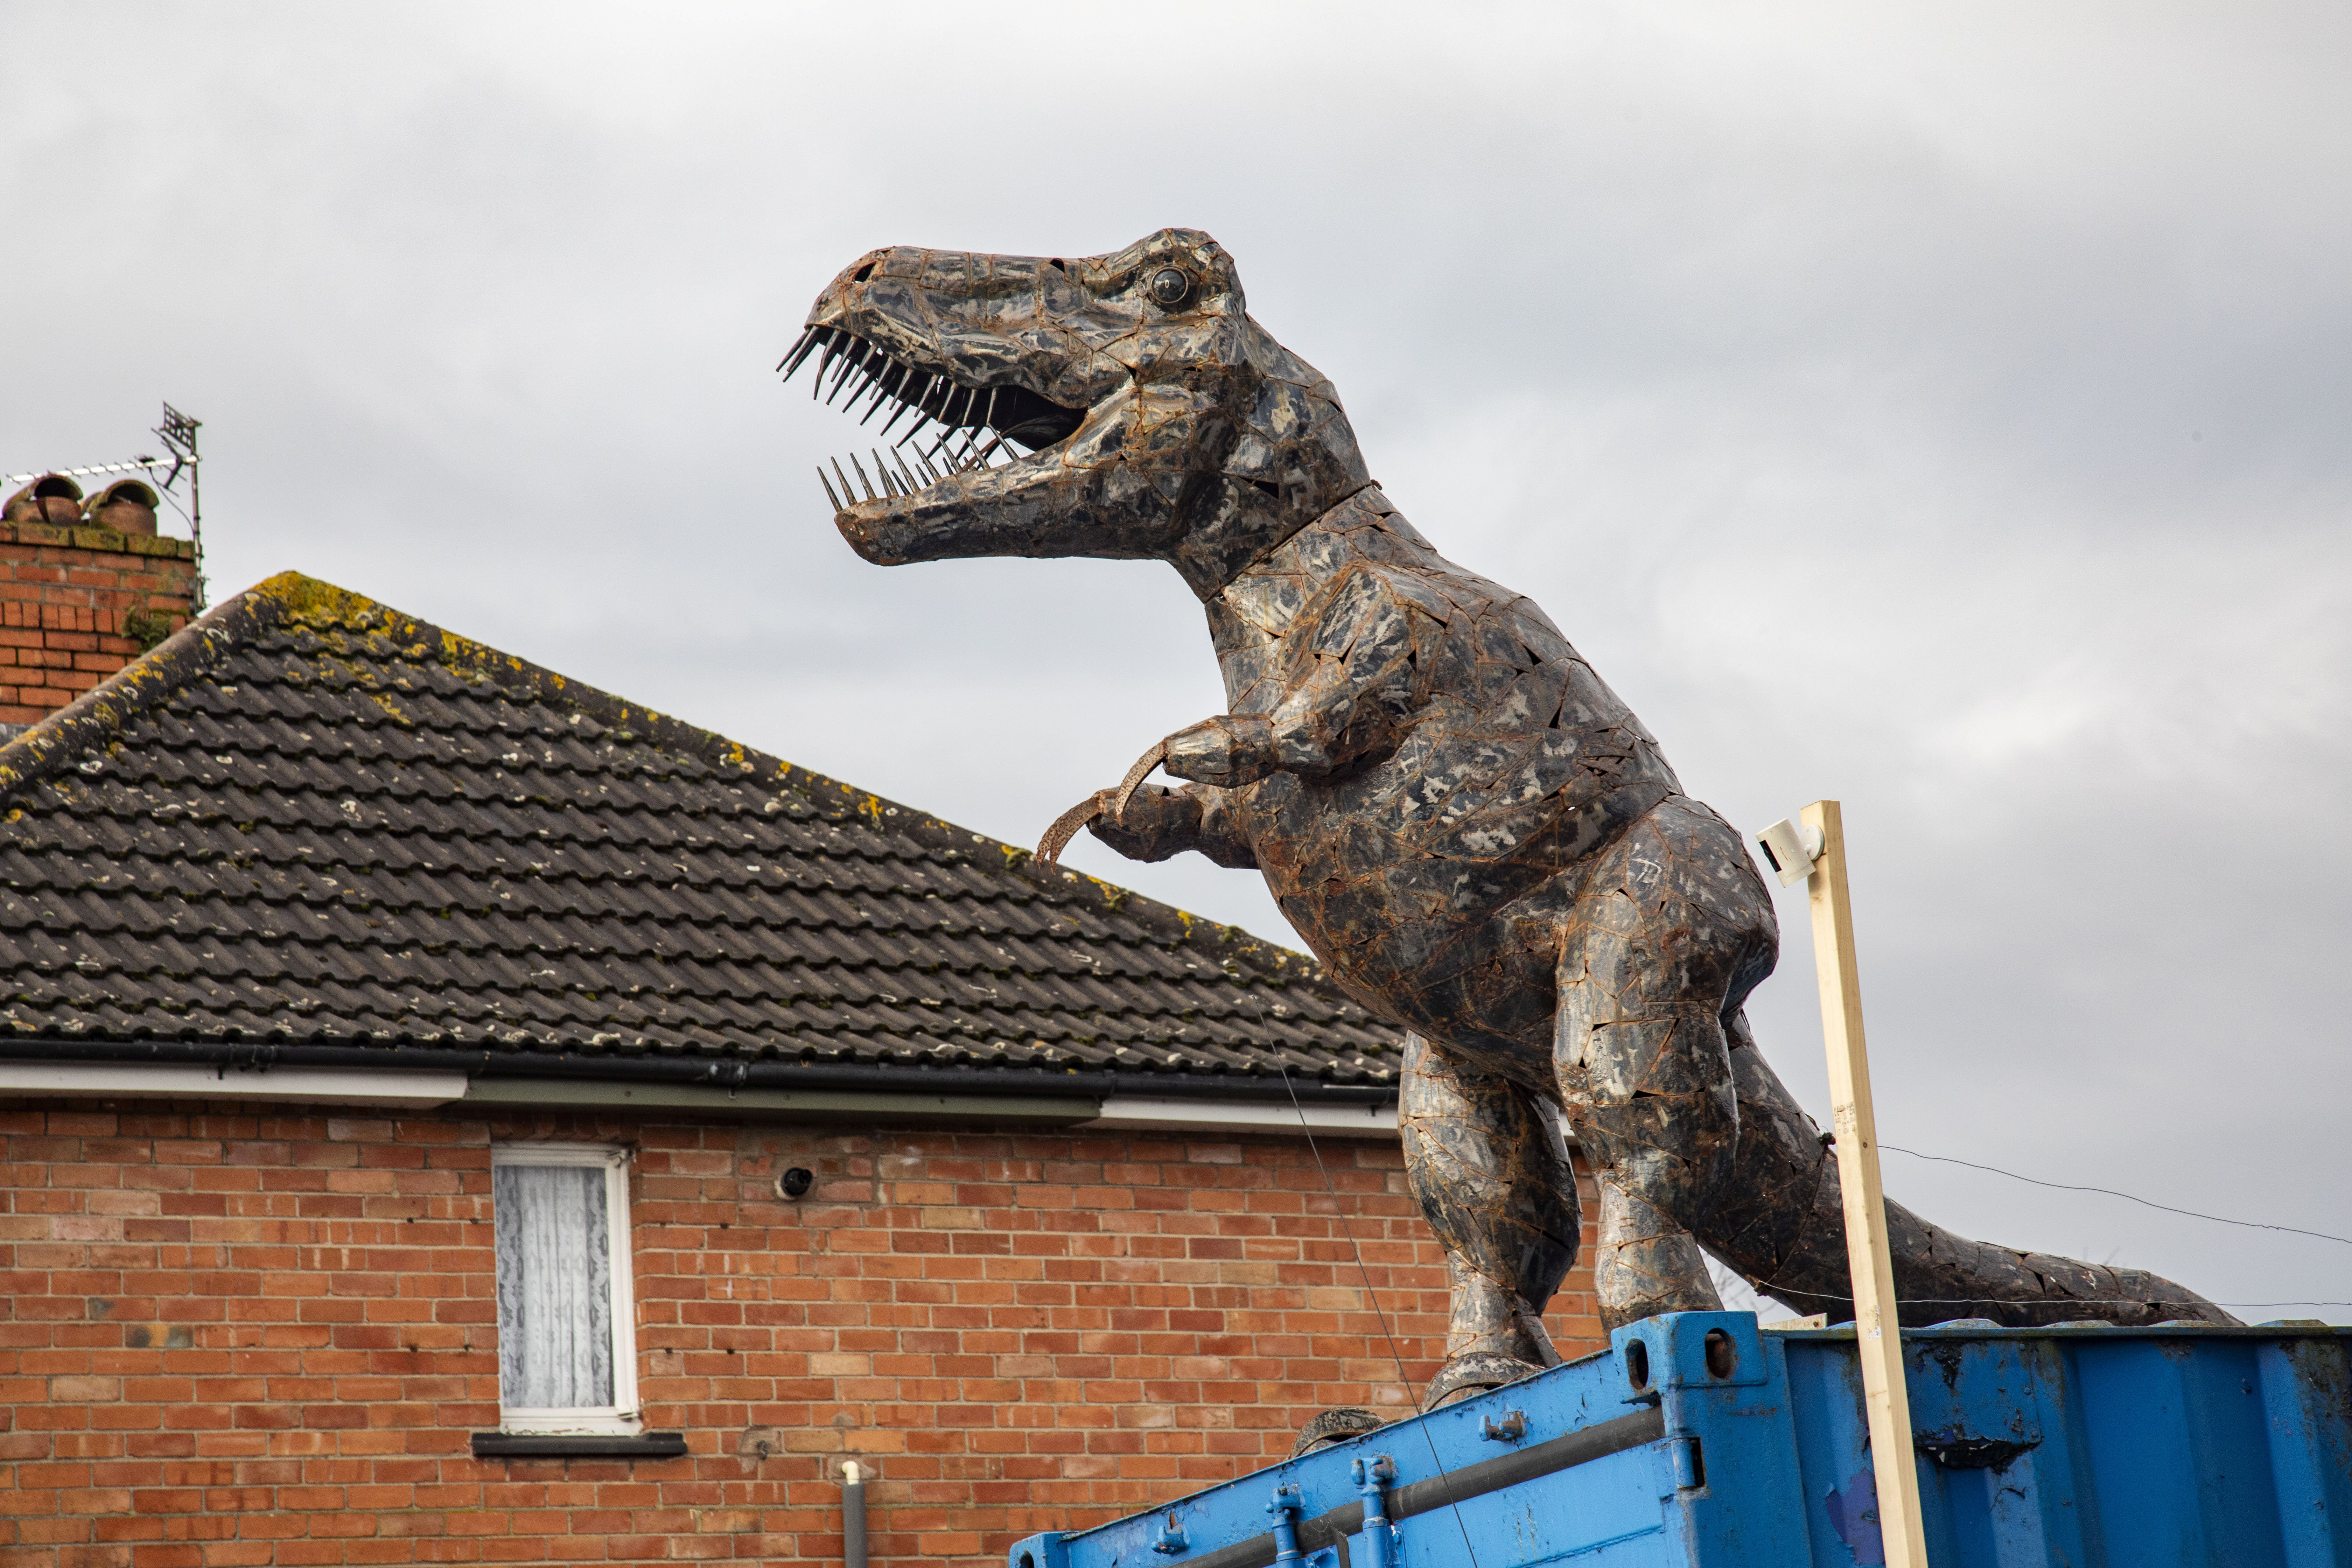 Ben nabbed the T-Rex at a garden centre three years ago